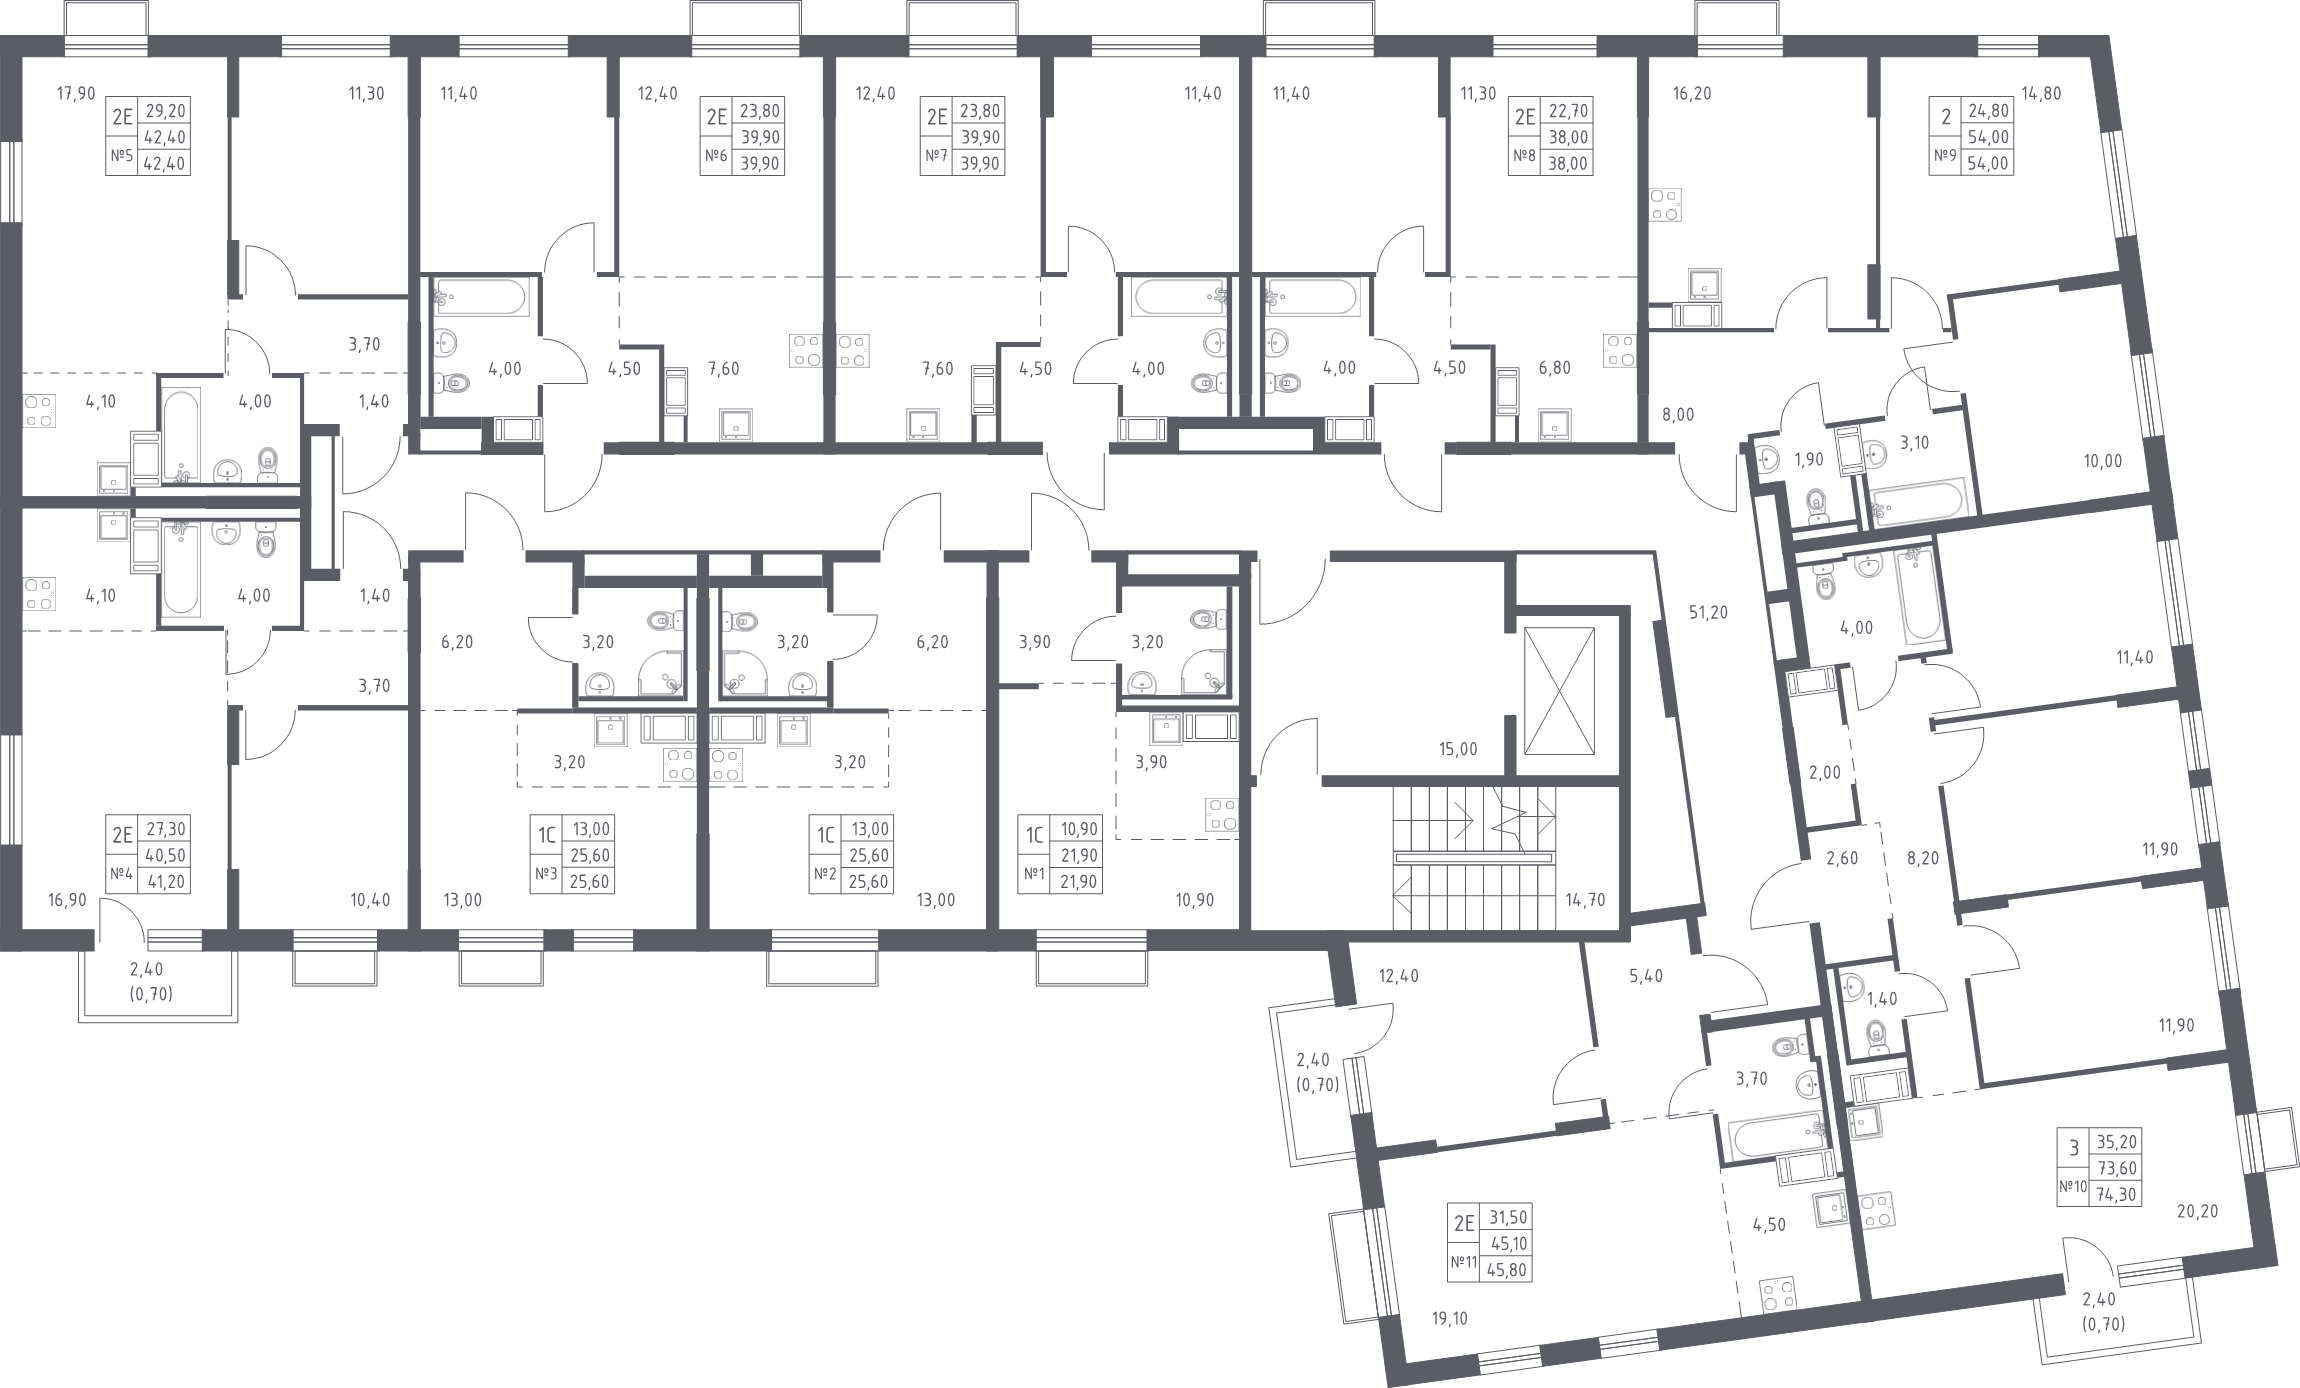 4-комнатная (Евро) квартира, 74.3 м² - планировка этажа